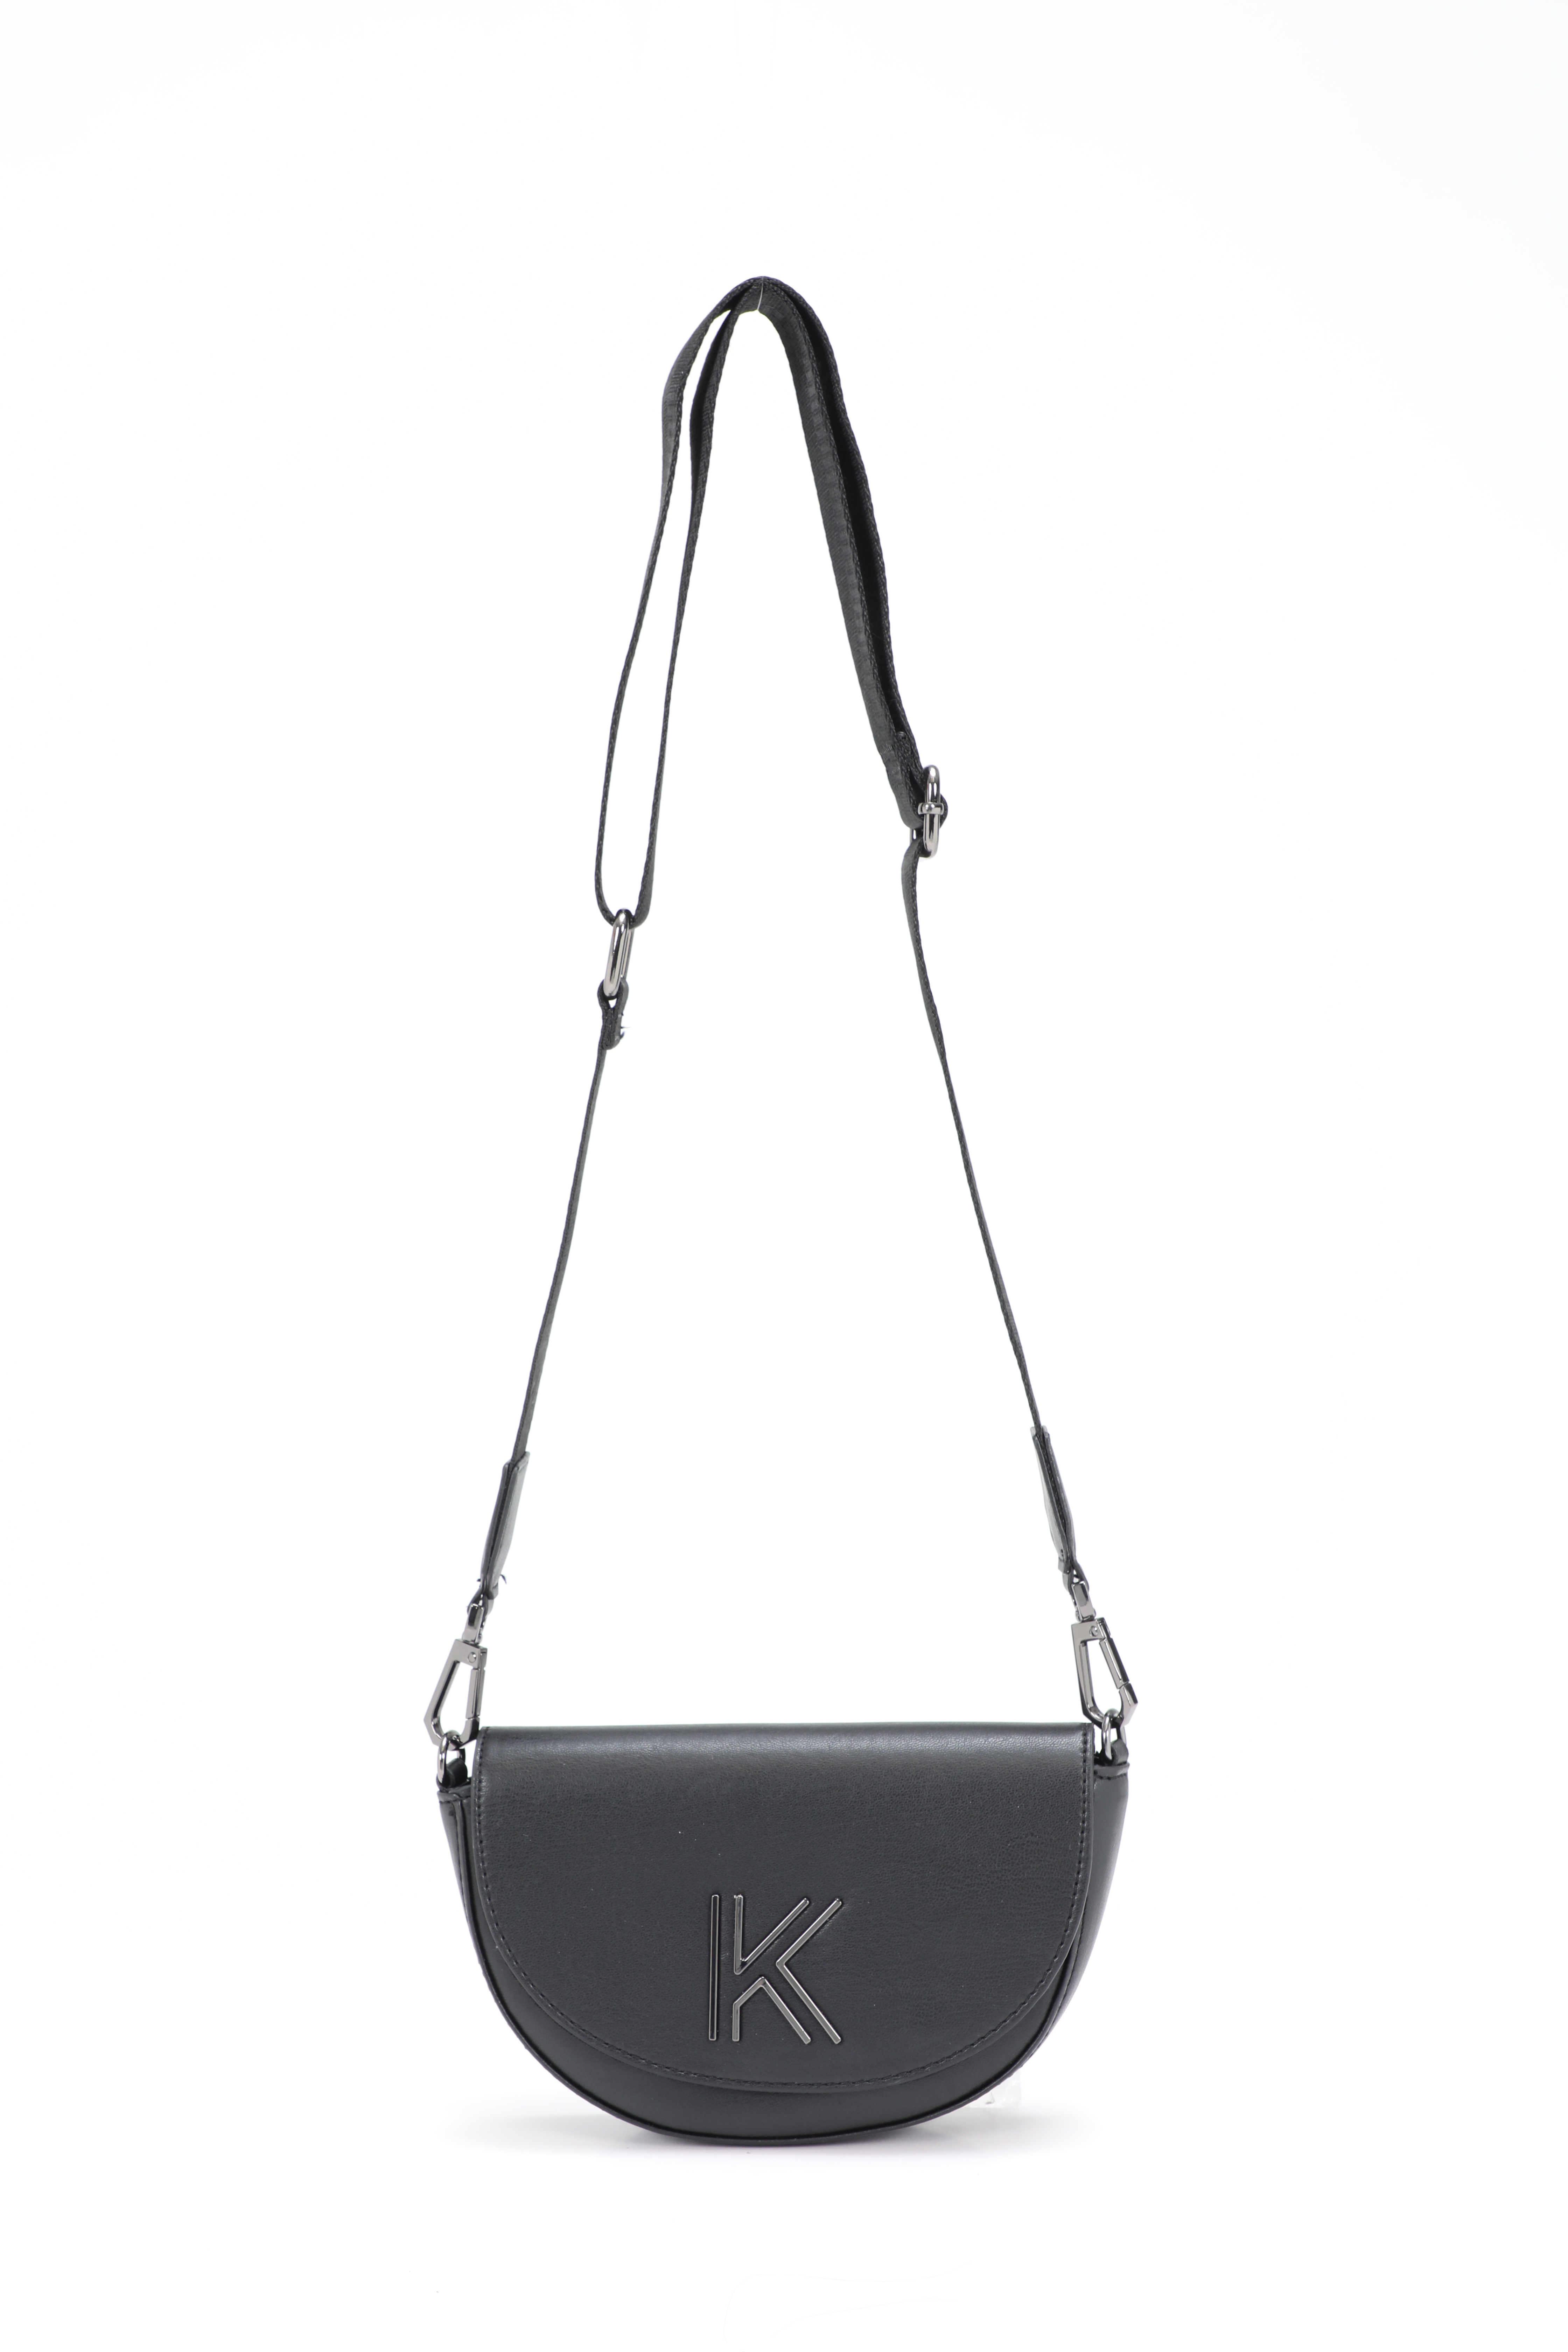 KENDALL+KYLIE – Γυναικεία τσάντα ώμου χιαστί KENDALL+KYLIE CYNTHIA MINI BAG μαύρη 1825931.0-0371